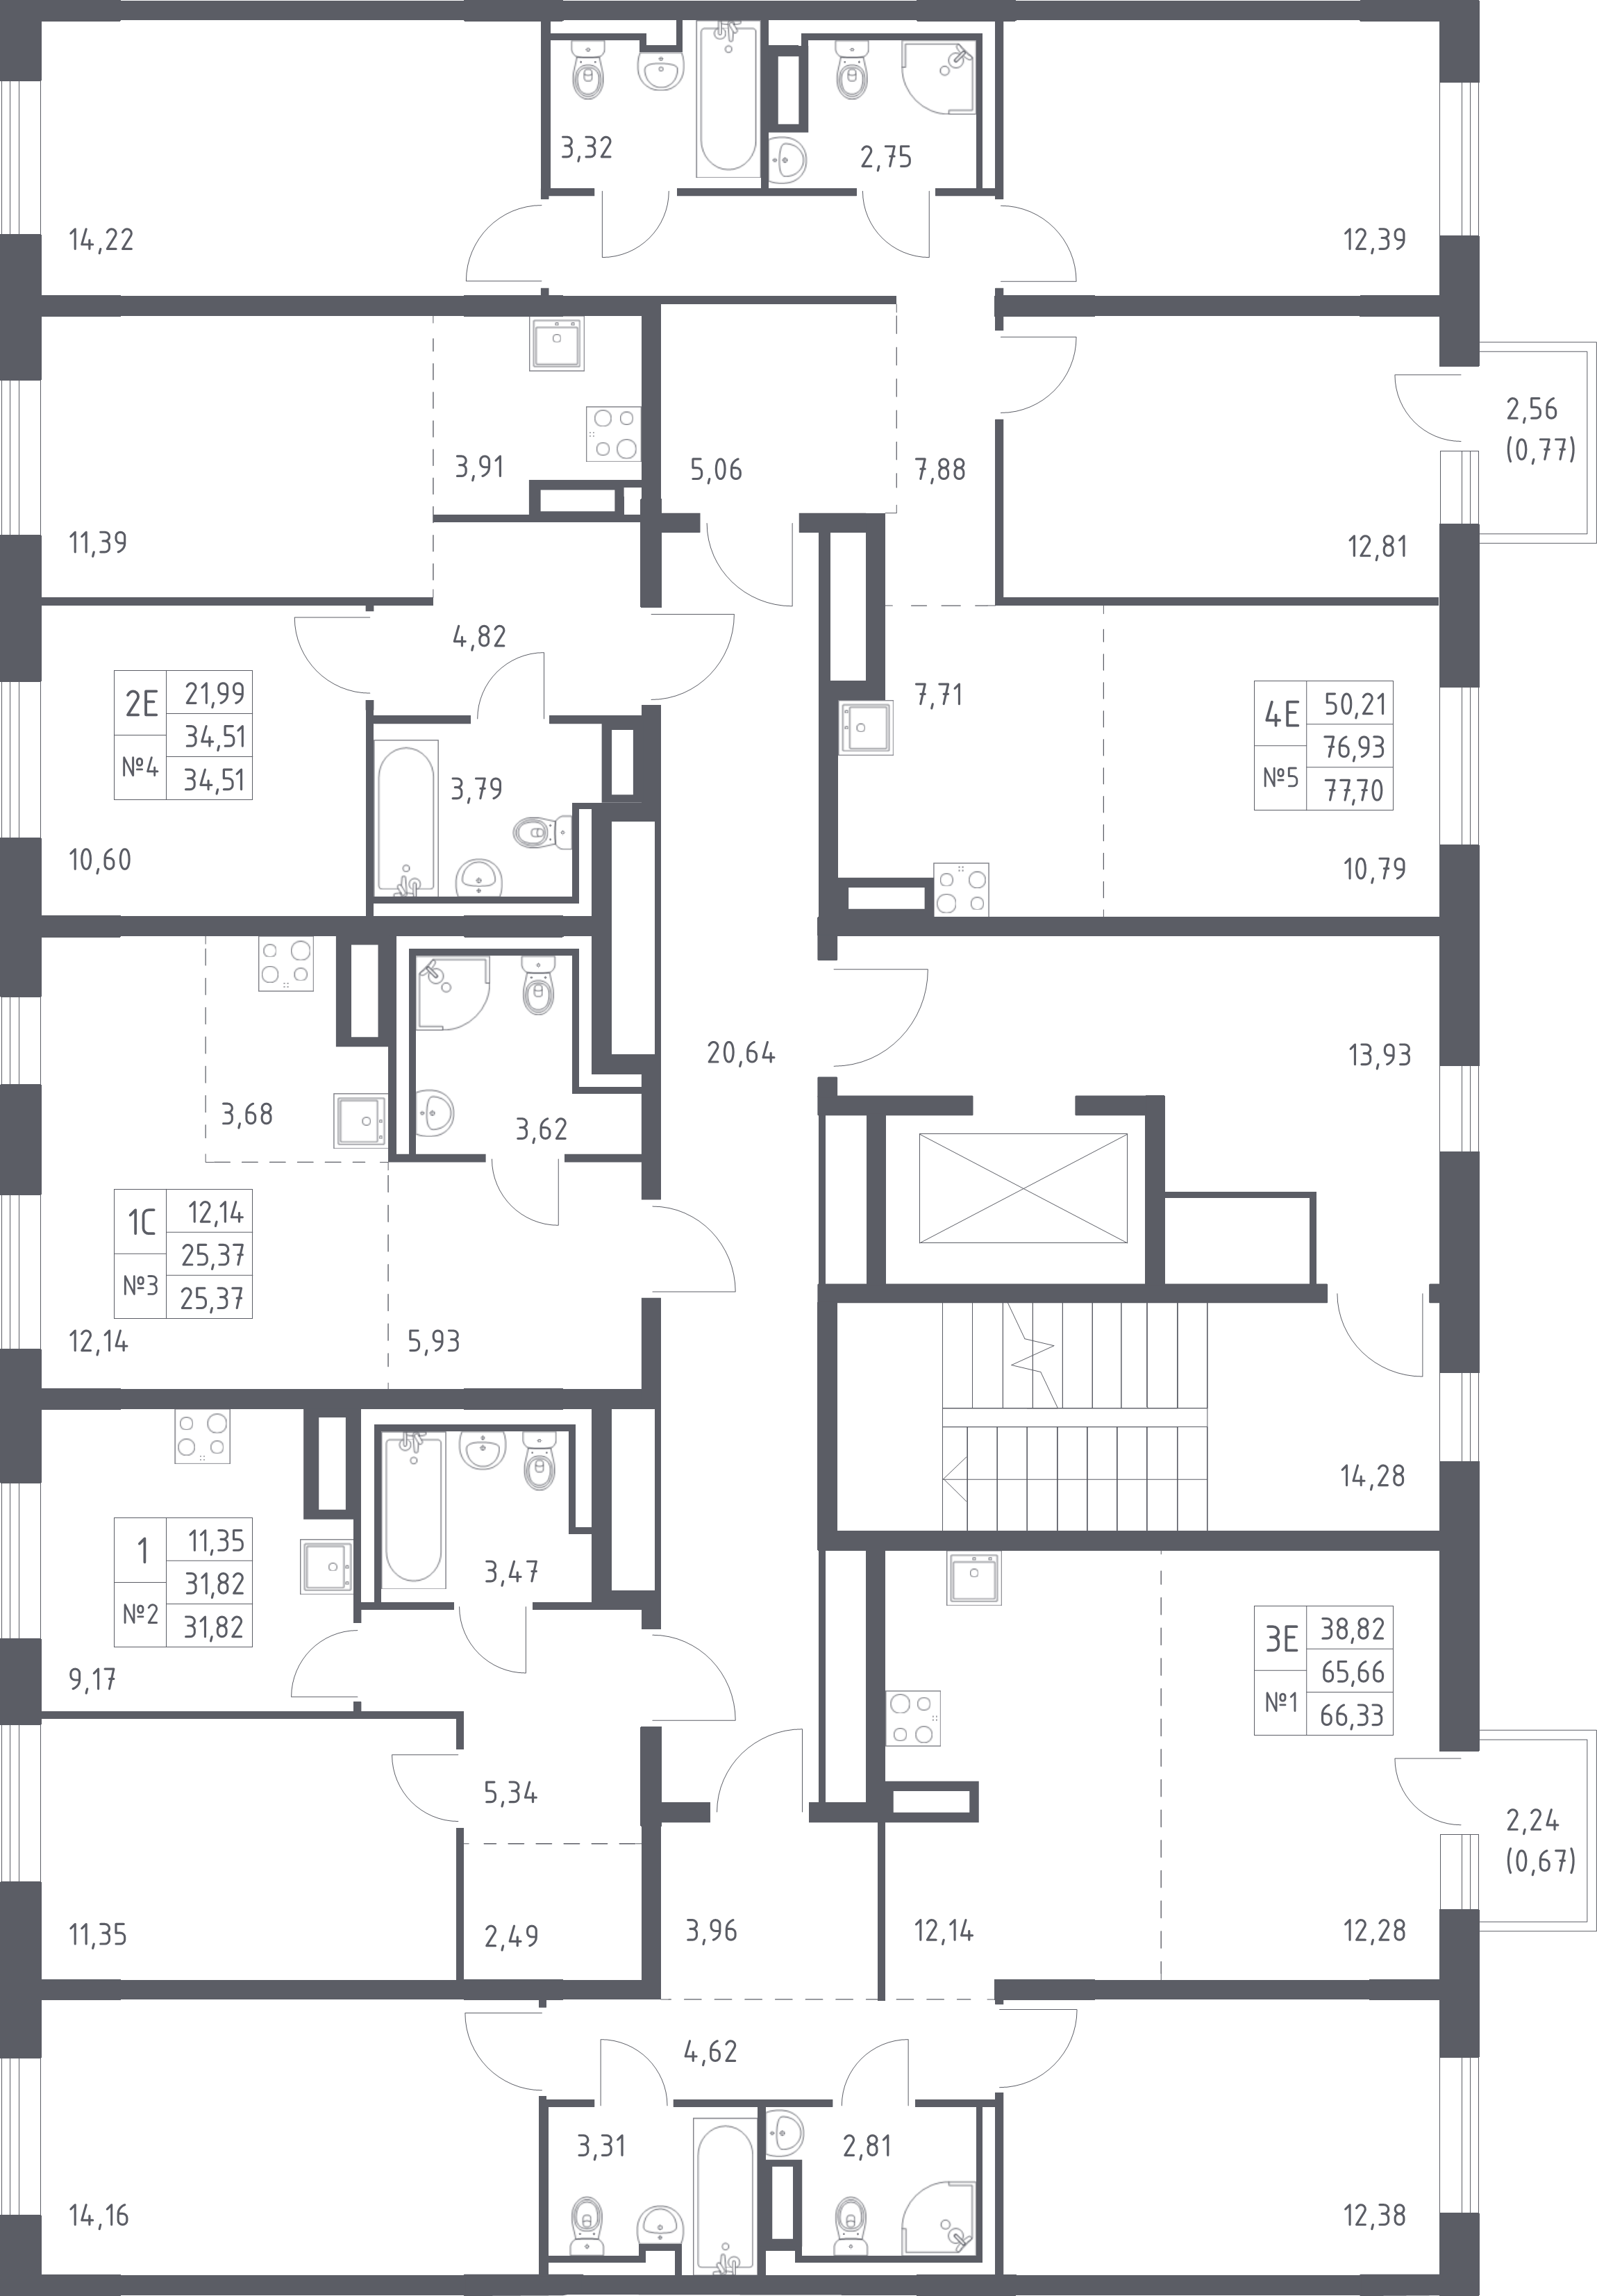 4-комнатная (Евро) квартира, 77.7 м² - планировка этажа